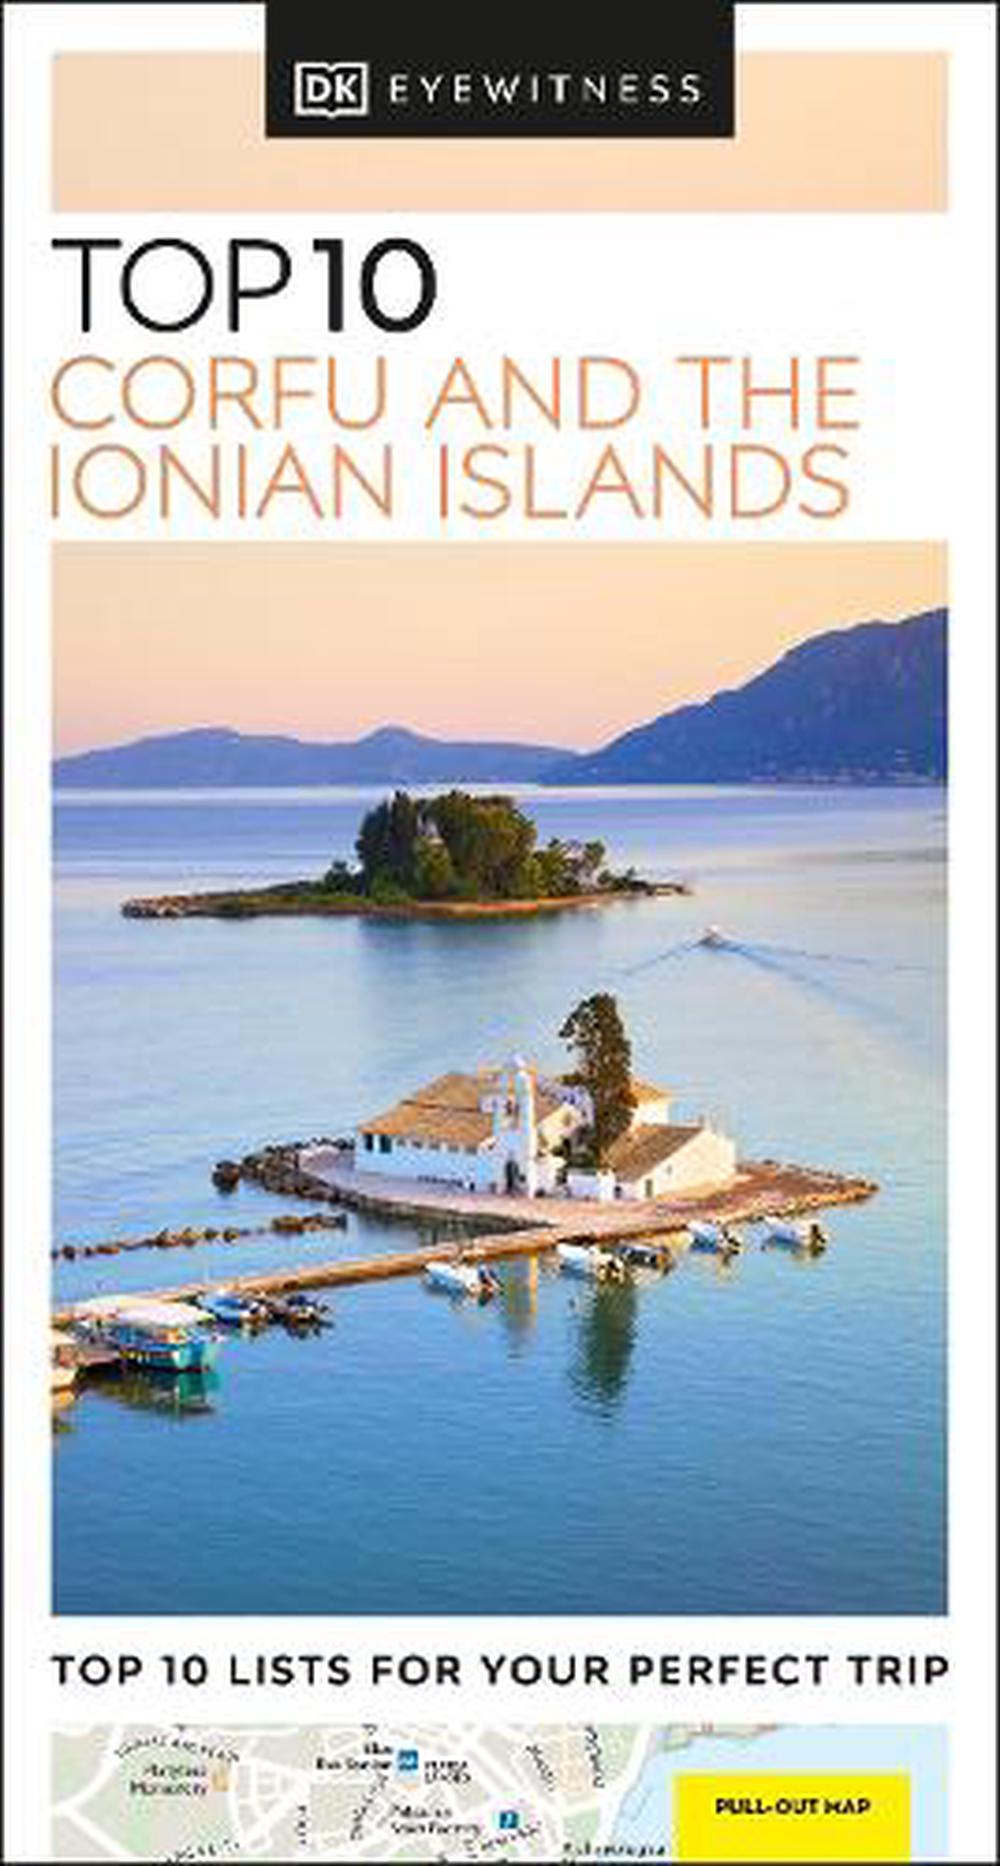 Buy　DK　Eyewitness,　online　DK　10　Top　Eyewitness　The　Islands　Corfu　Paperback,　Ionian　and　Nile　the　by　9780241462690　at